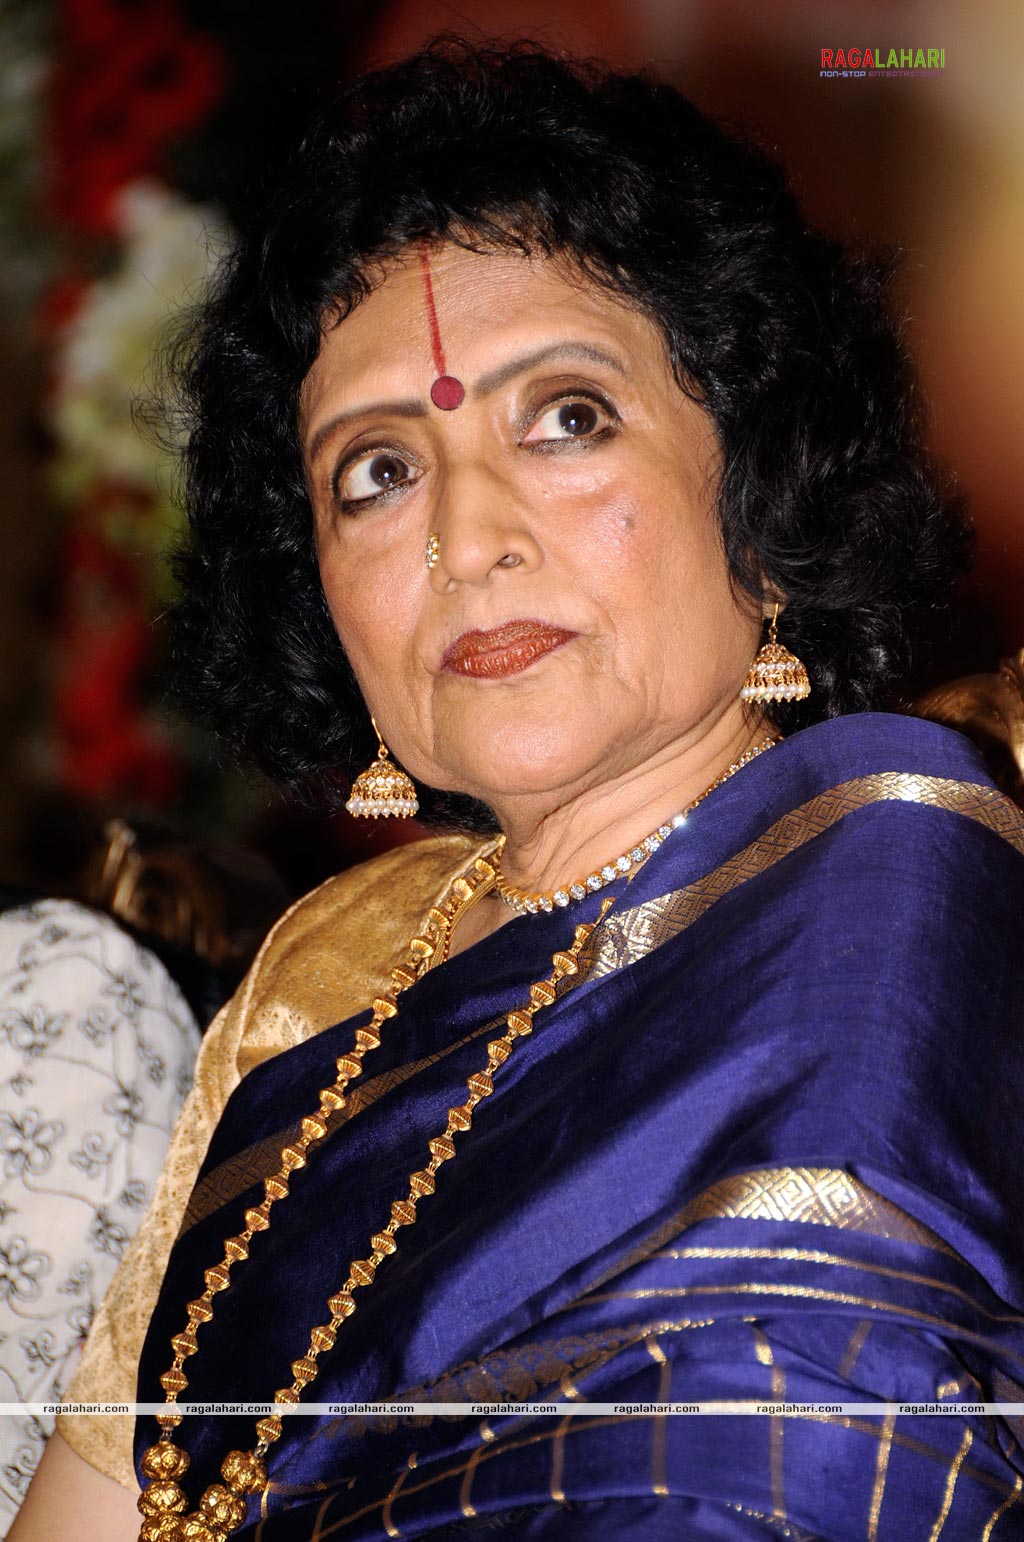 Akkineni Nageswara Rao Award 2008 Presented to Dr. Vyjayantimala Bali